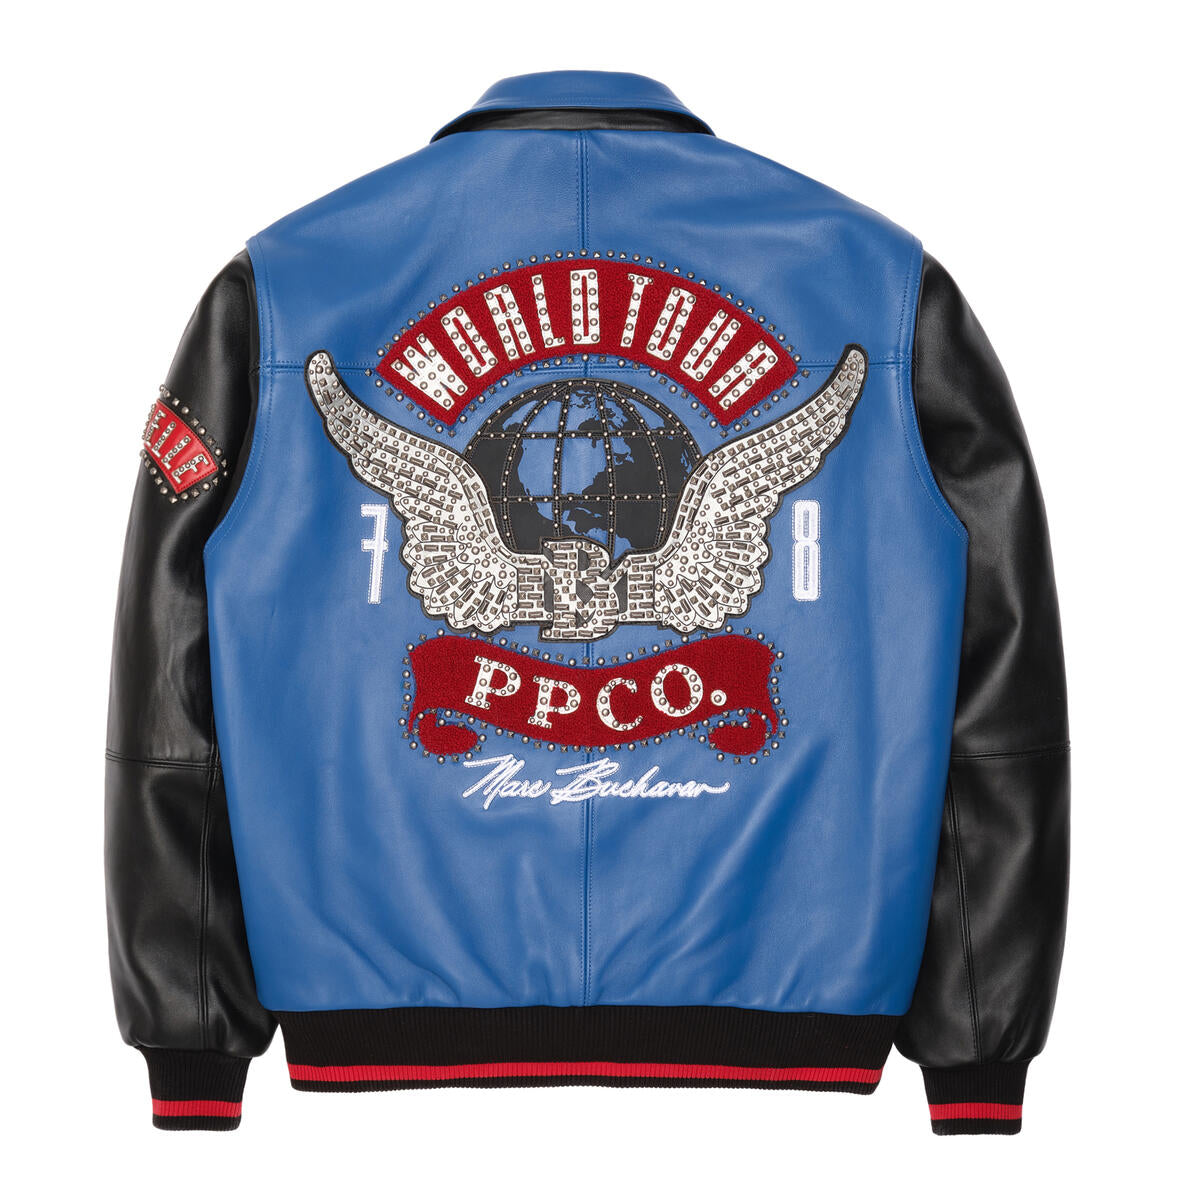 Pelle Pelle leather World Tour Jacket